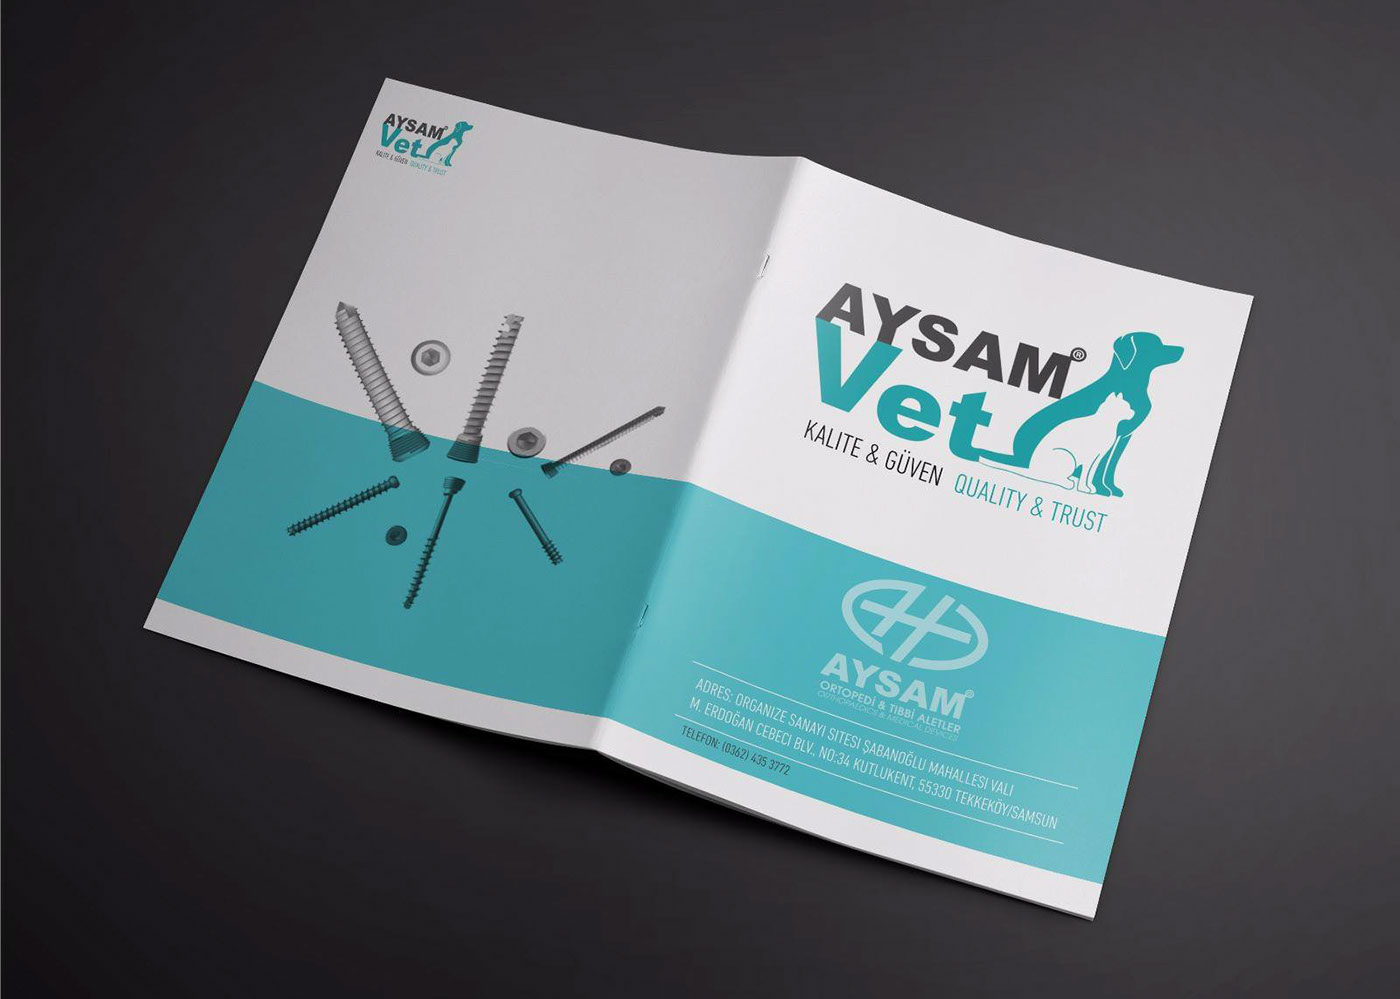 Aysam Ortapedi Bramding Desihns 2017 logo brochure mobıle artboard raket paket box